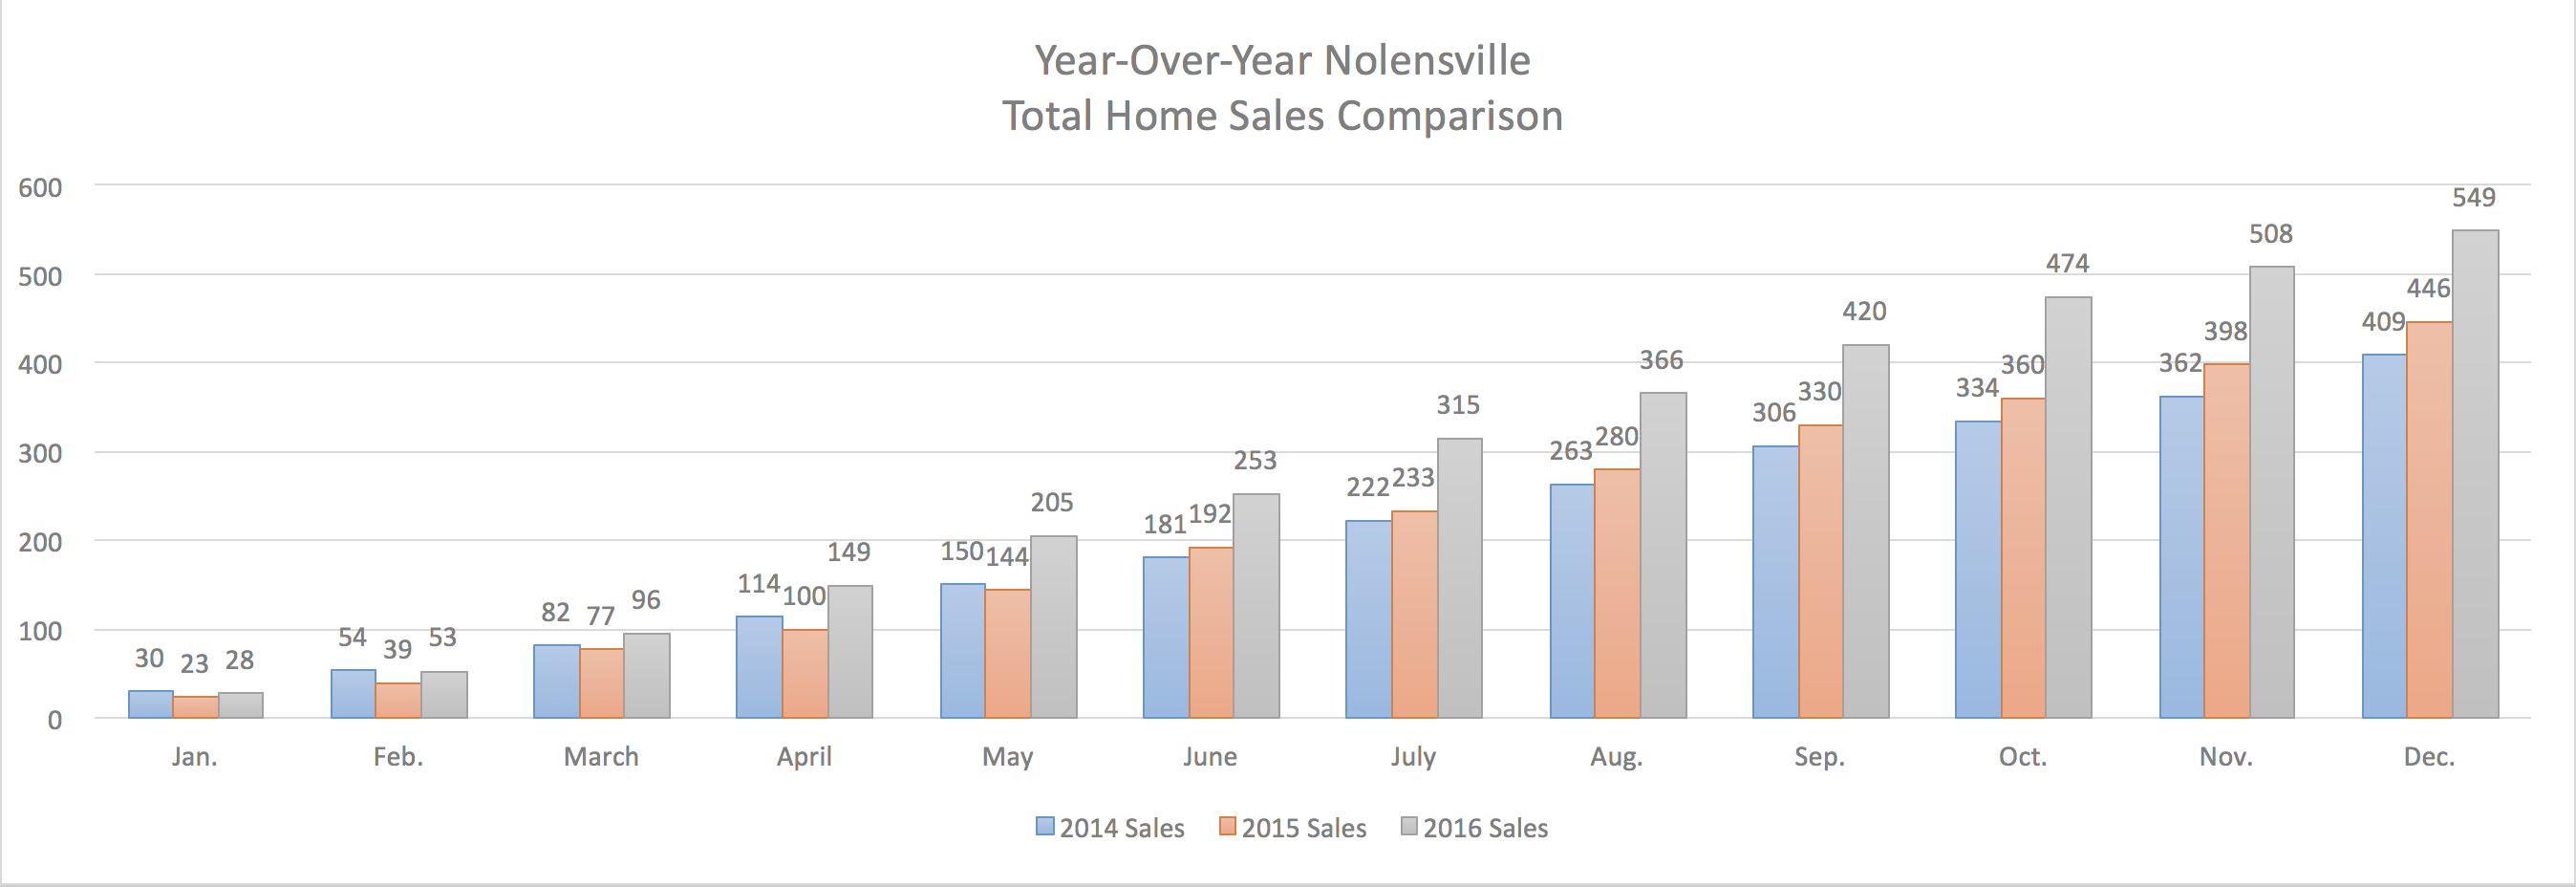 Nolensville 2016 Year-Over-Year Sales